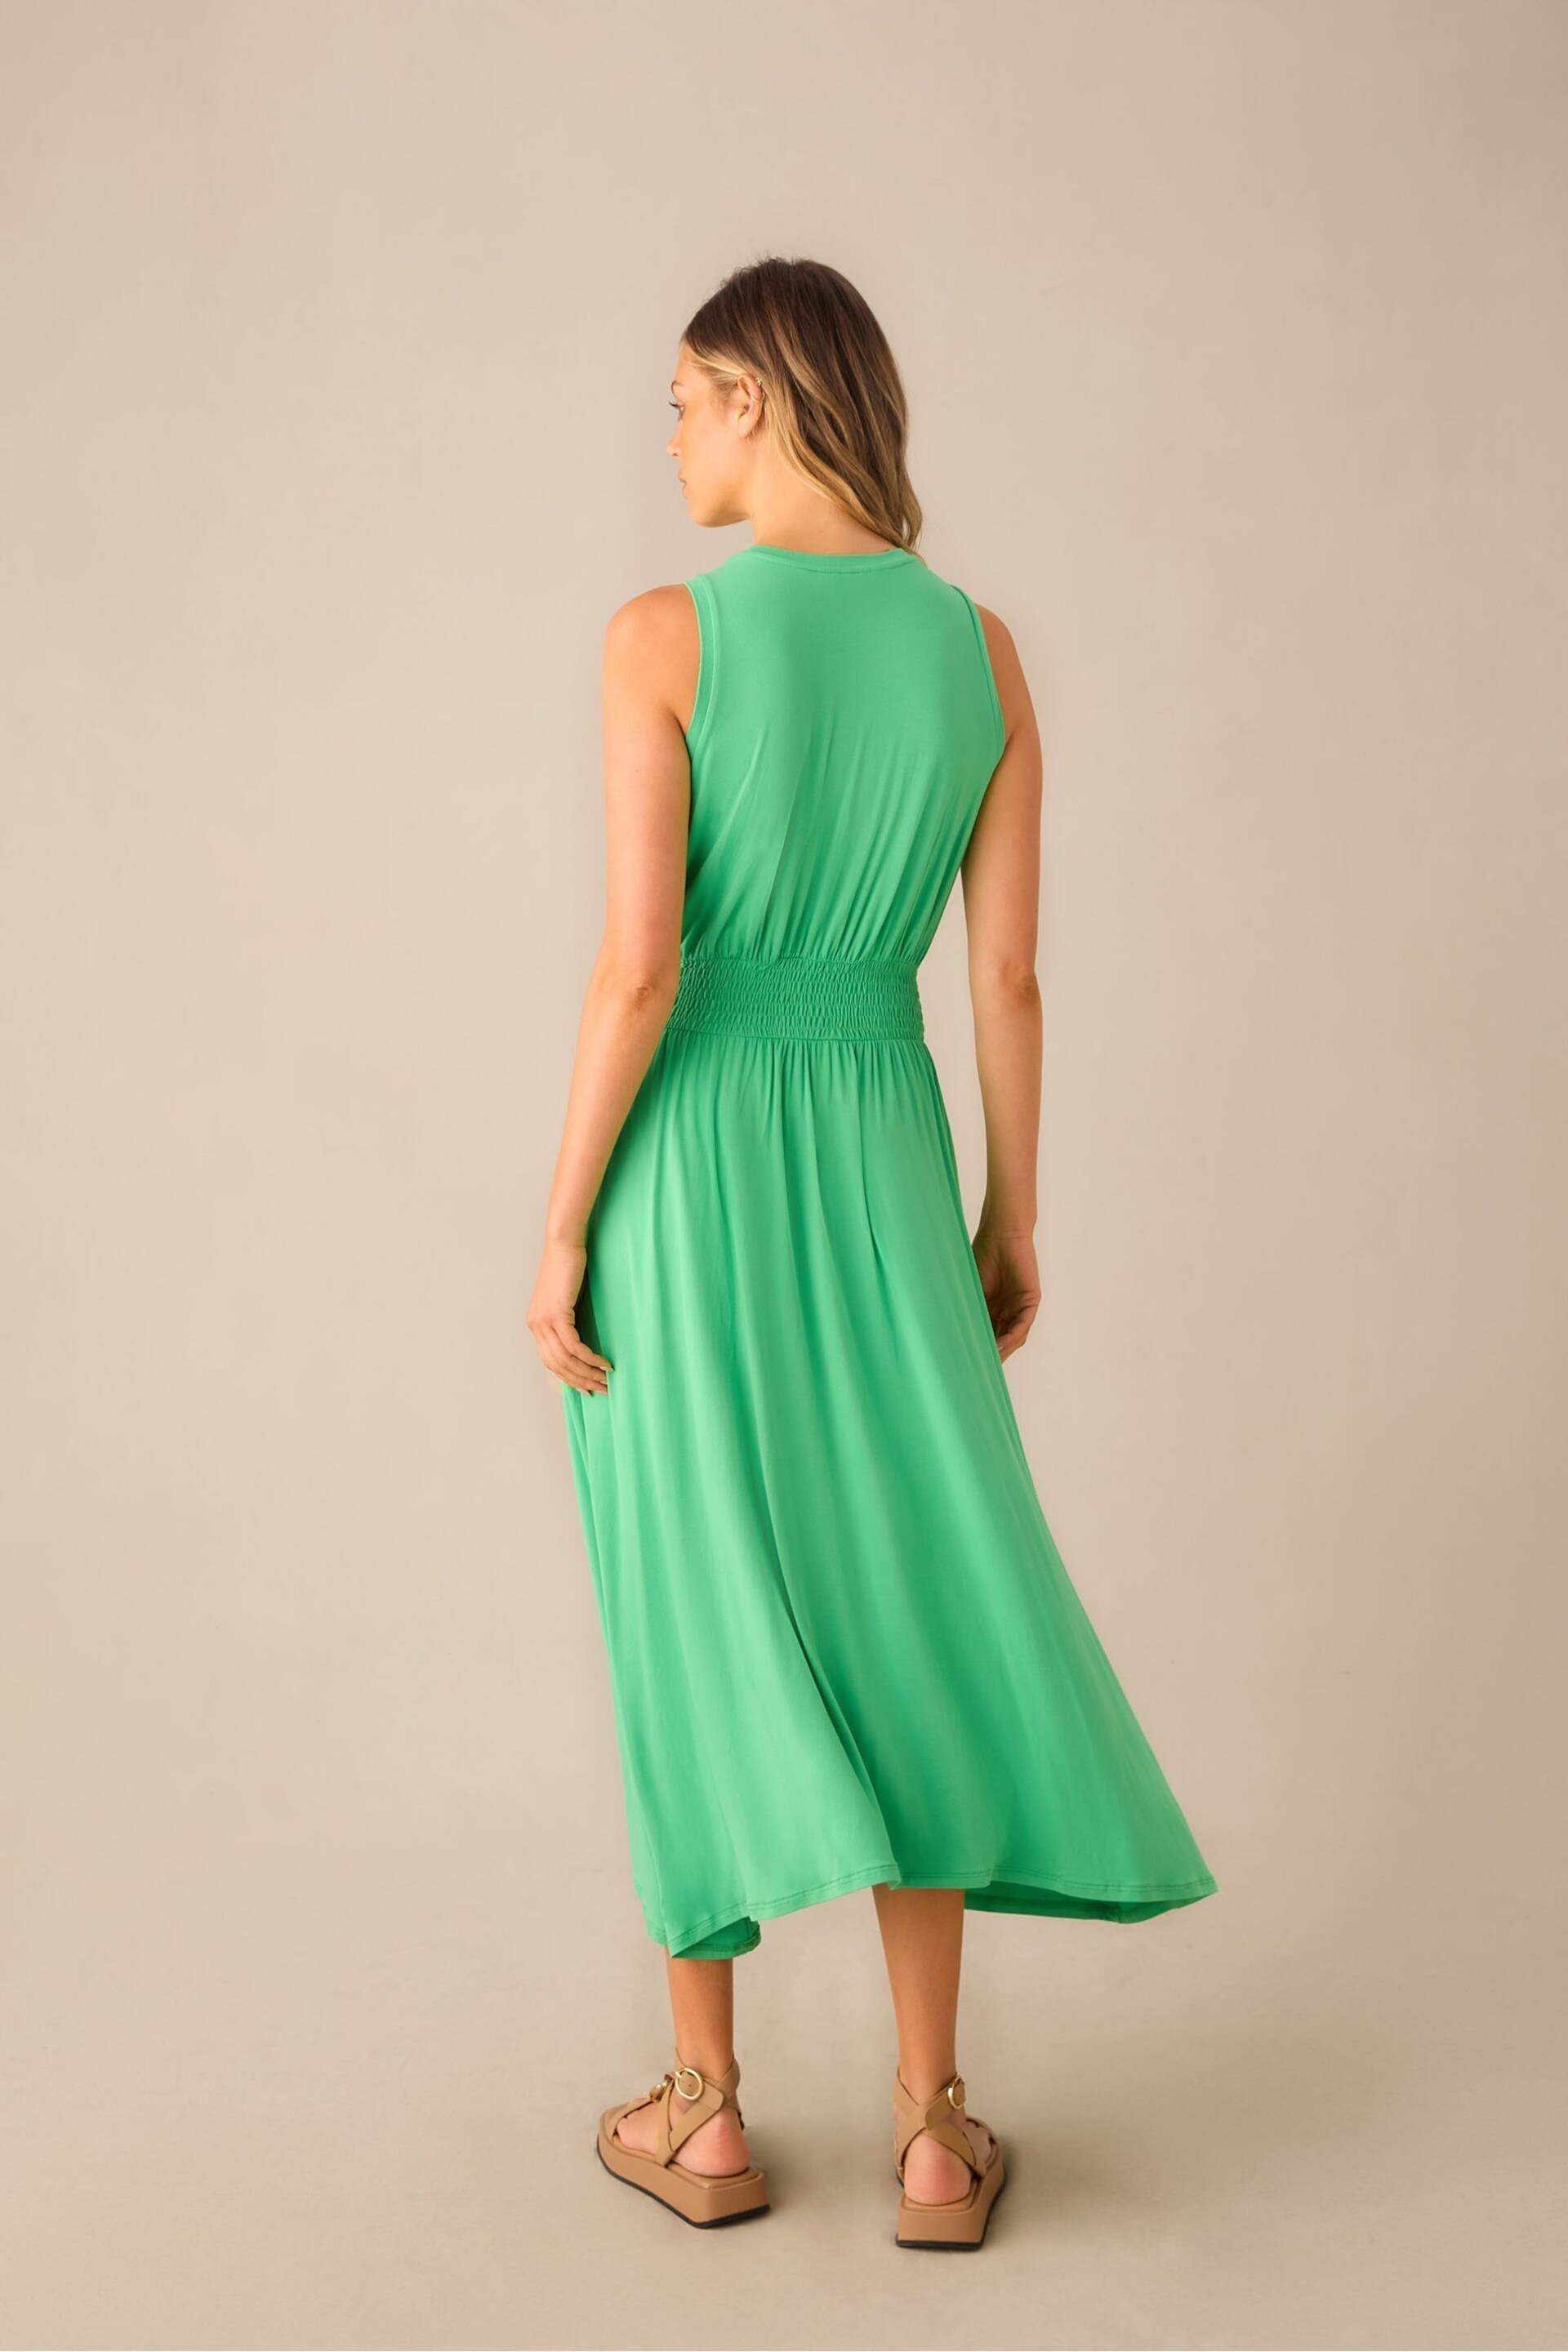 Ro&Zo Green Jersey Shirred Waistband Dress - Image 4 of 5